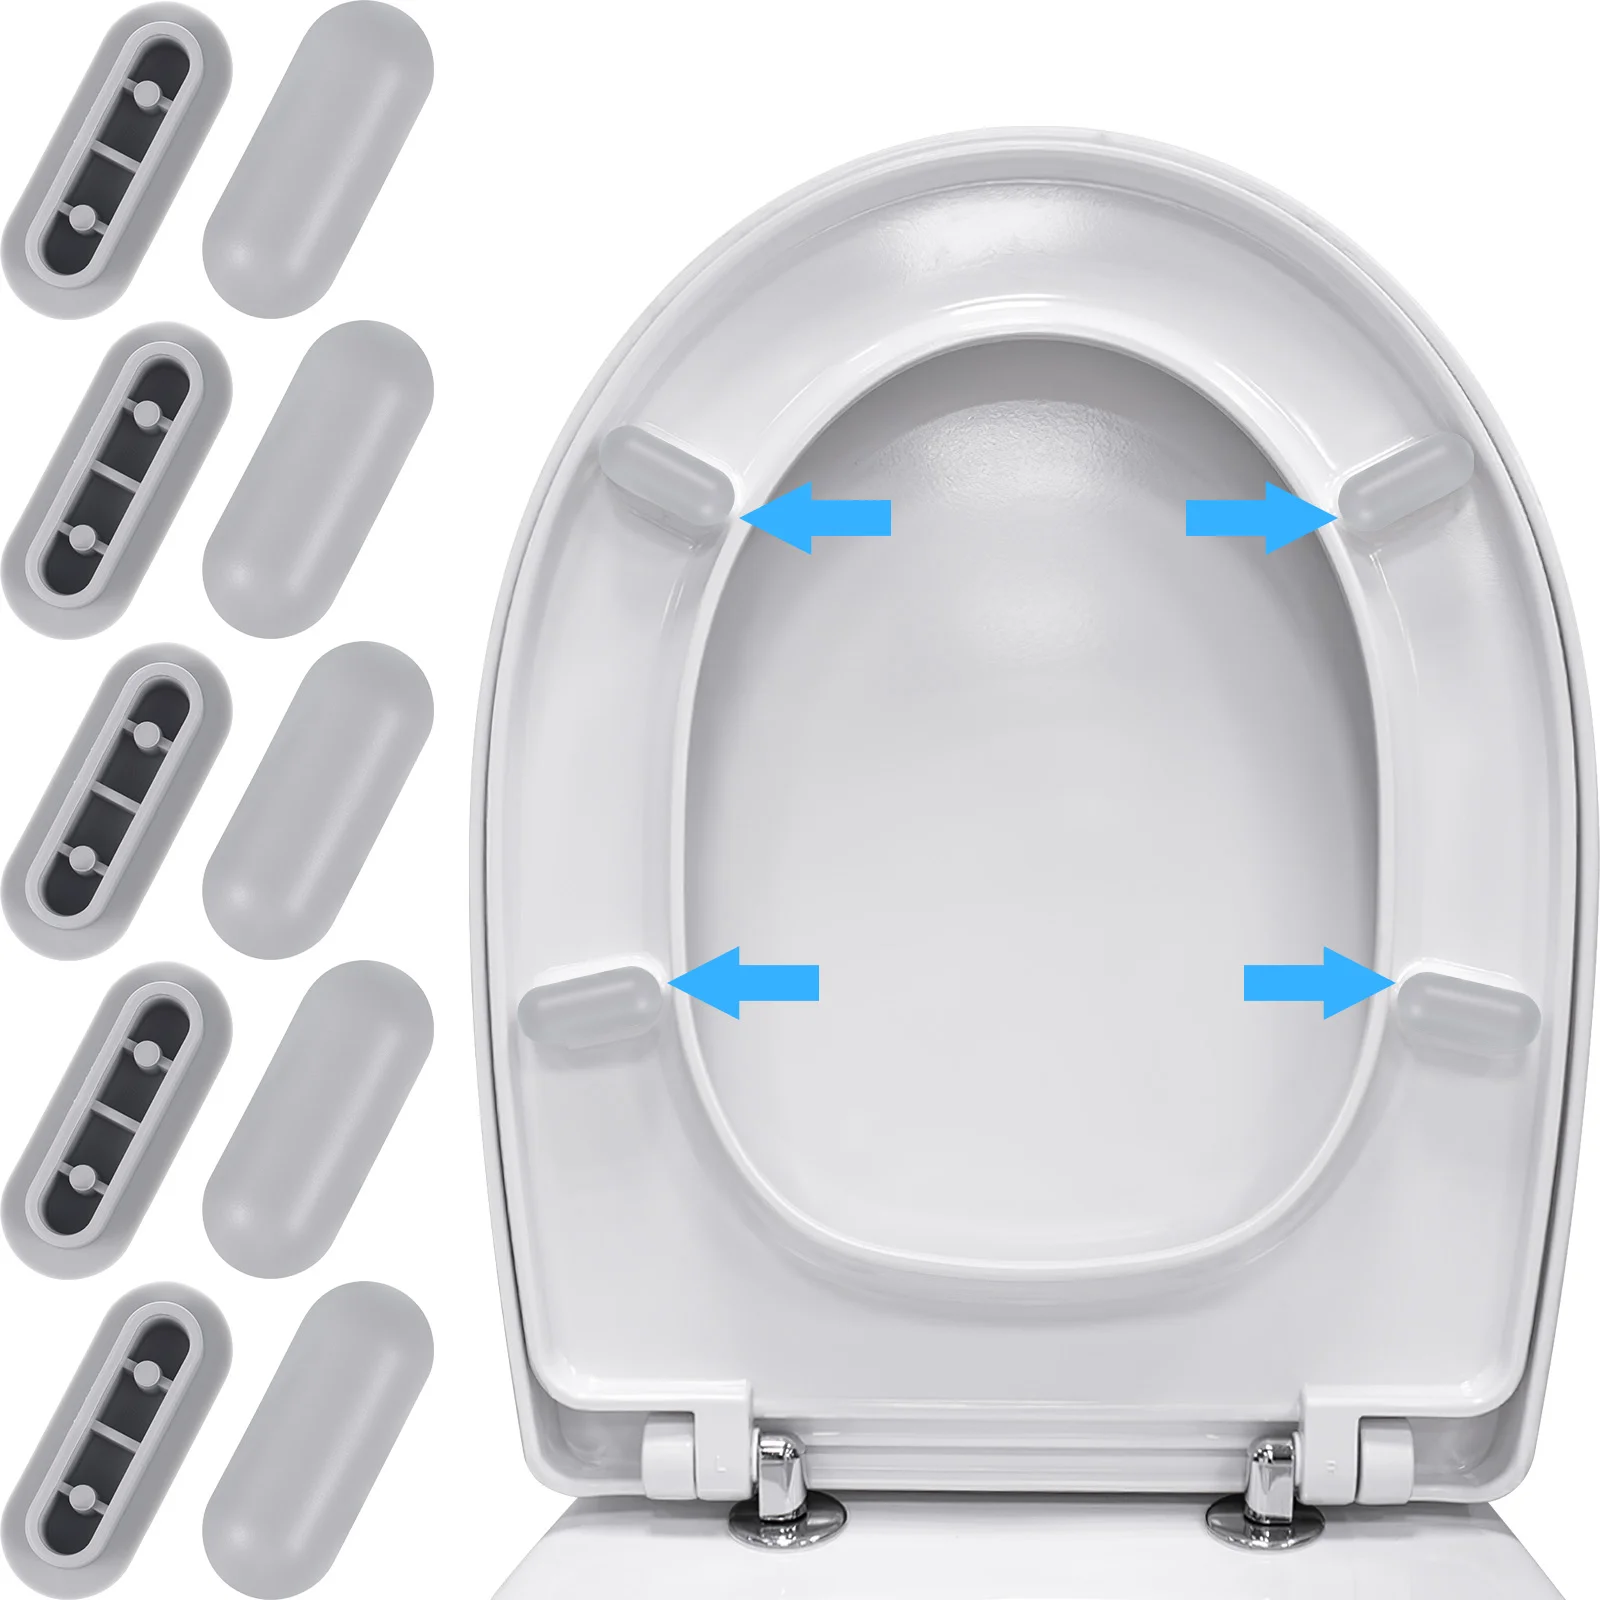 10 Pcs Cushion Toilet Gasket Travel Accessories Self-adhesive Pad Plastic Anti-slip 4 pcs bumpers toilet seat accessories spacer cushioning pad antislip gasket lifter